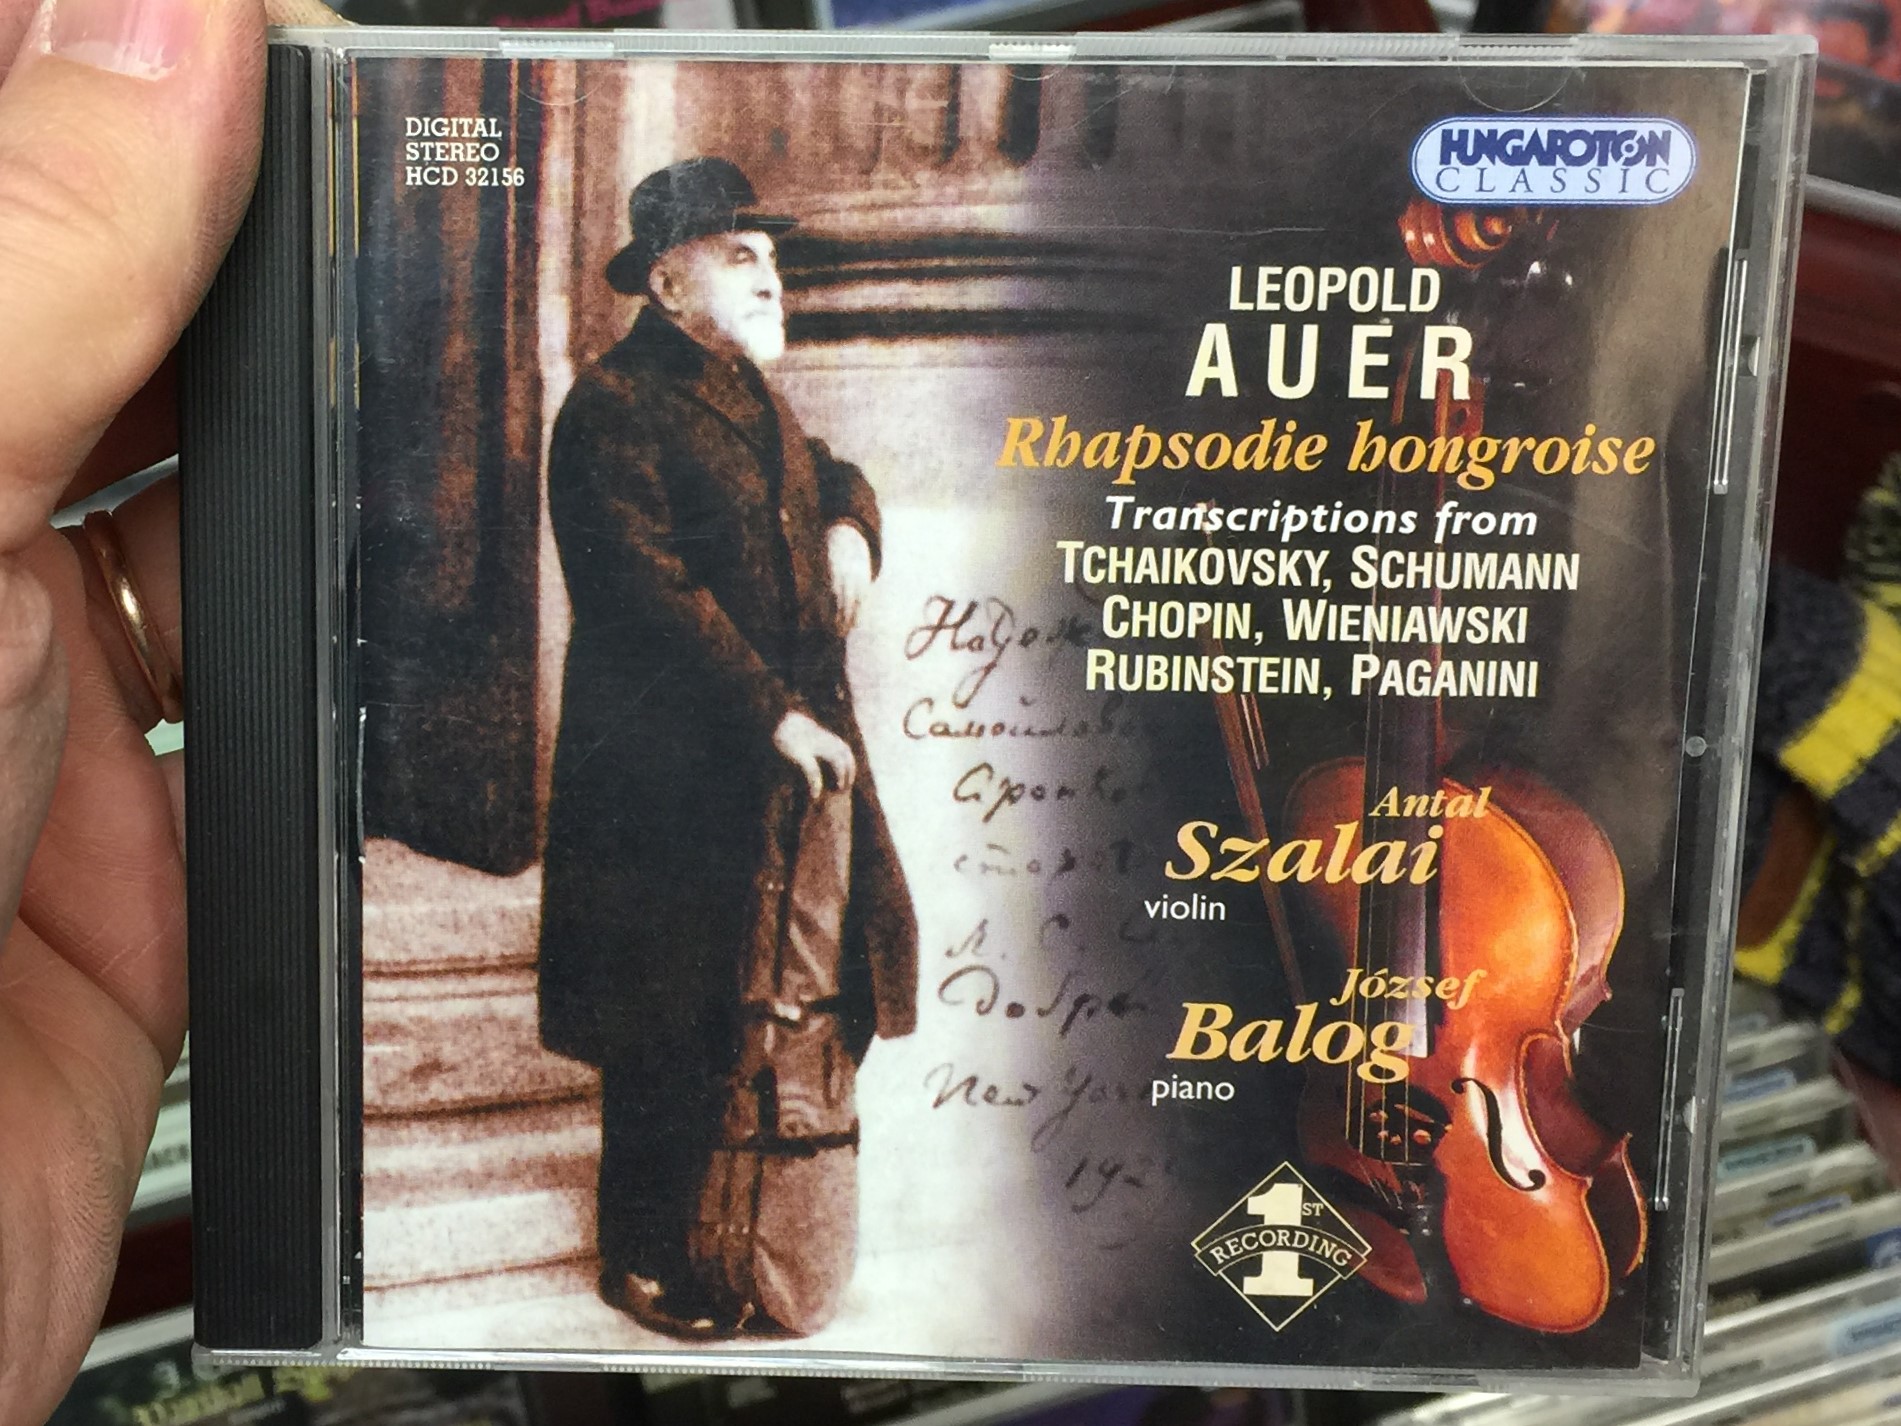 leopold-auer-rhapsodie-hongroise-transcriptions-from-tchaikovsky-schumann-chopin-wieniawski-rubinstein-paganini-antal-szalai-violin-jozsef-balog-piano-hungaroton-classic-audio-cd-20-1-.jpg